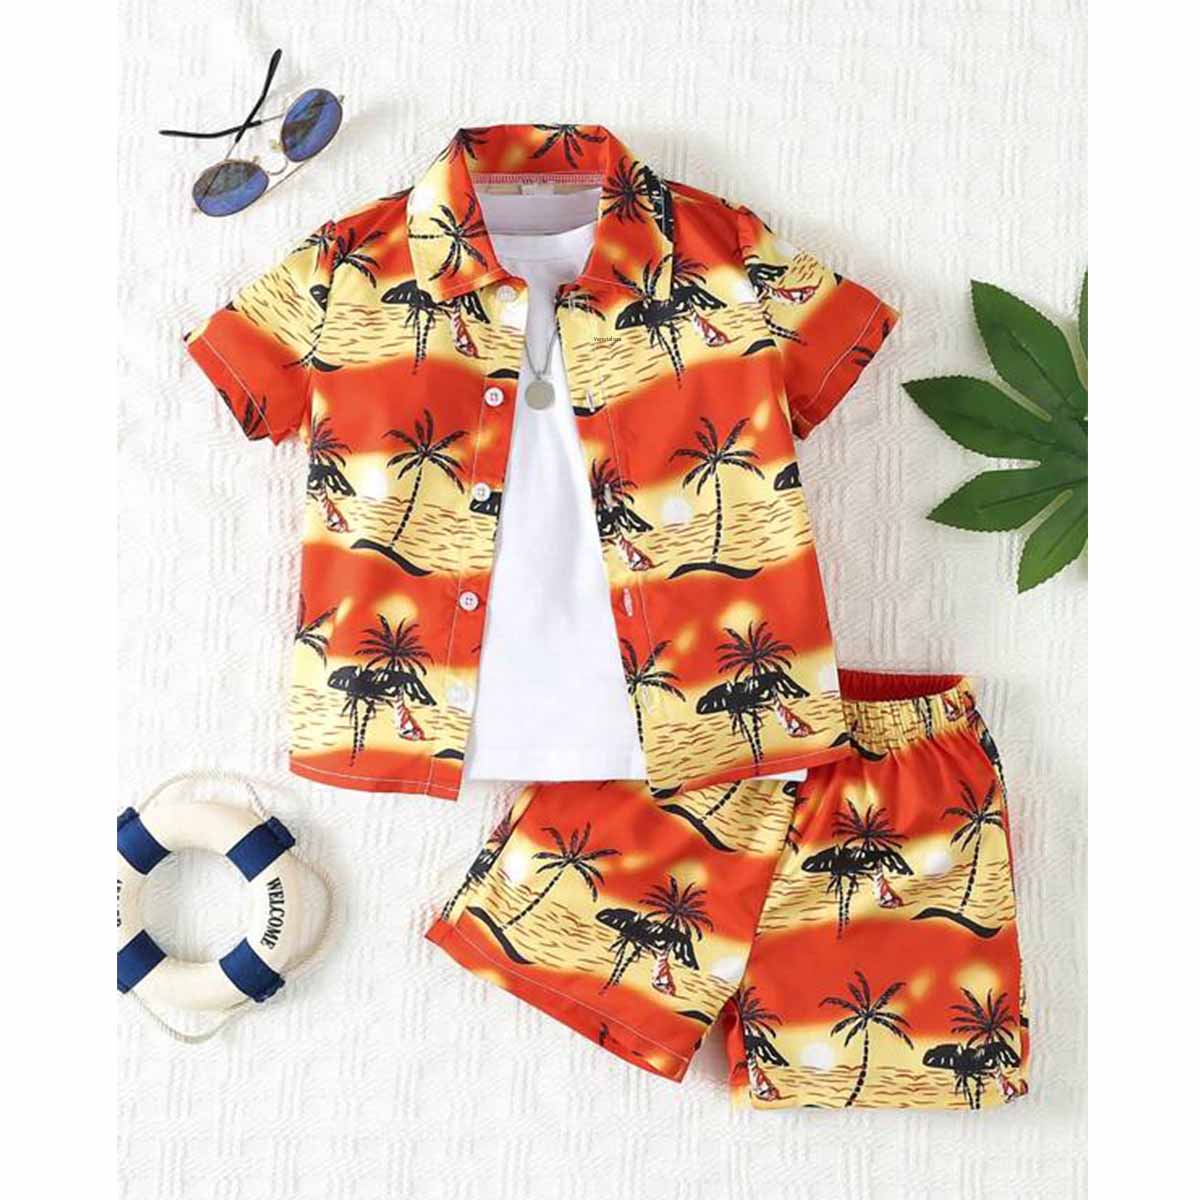 Venutaloza Kids Sunshine Tropical Print Shirt & Shorts Without tee Two Piece Set.